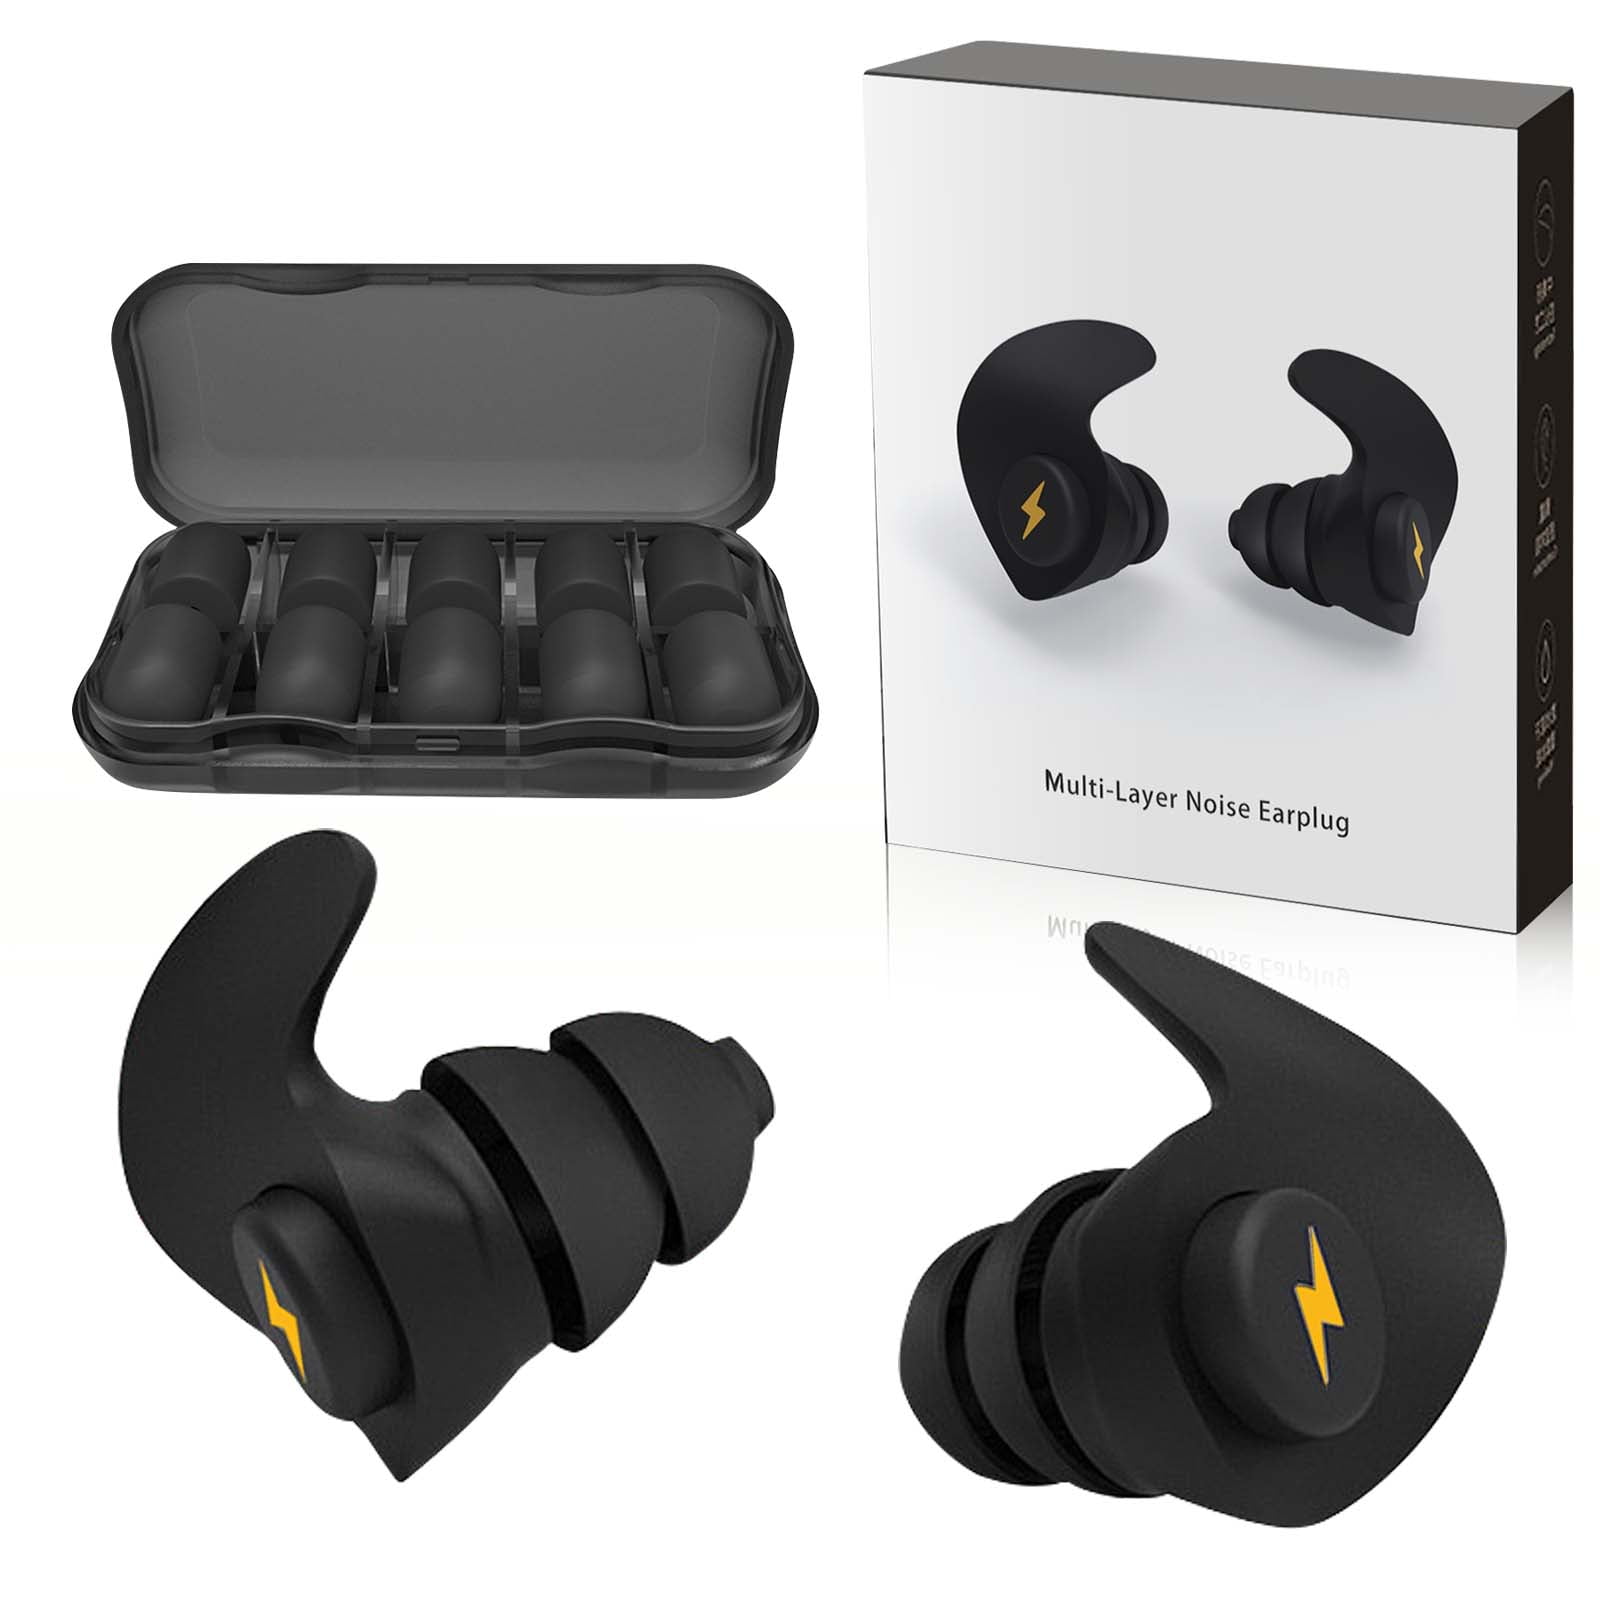 Hot Silicone Ear Plugs Anti Noise Snore Earplugs Gift D1J8 For Stu Q9J8 X0X9 